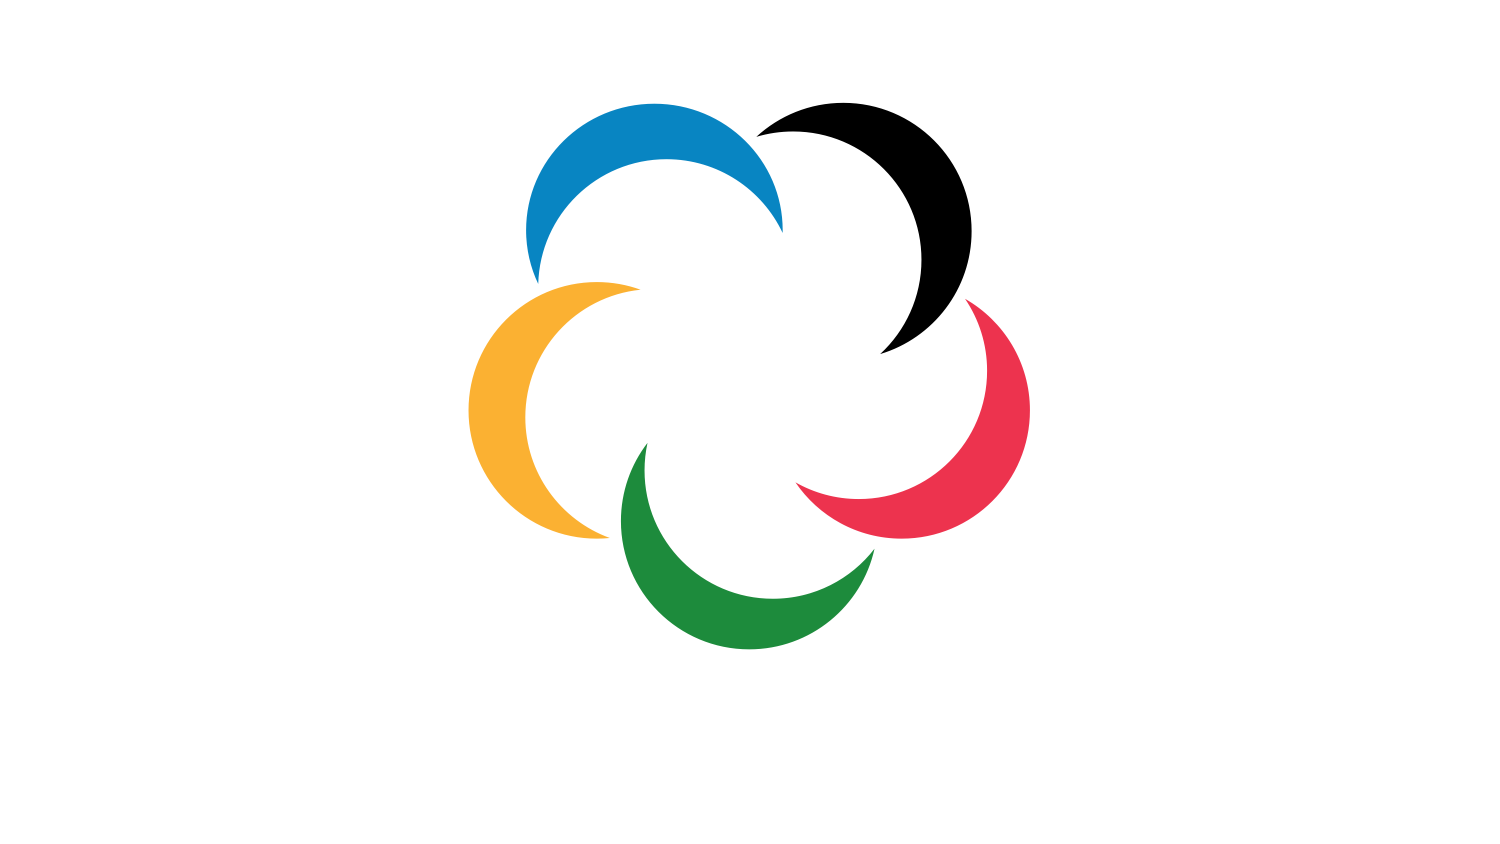 BOCCONI STUDENTS FOR SPORT MANAGEMENT